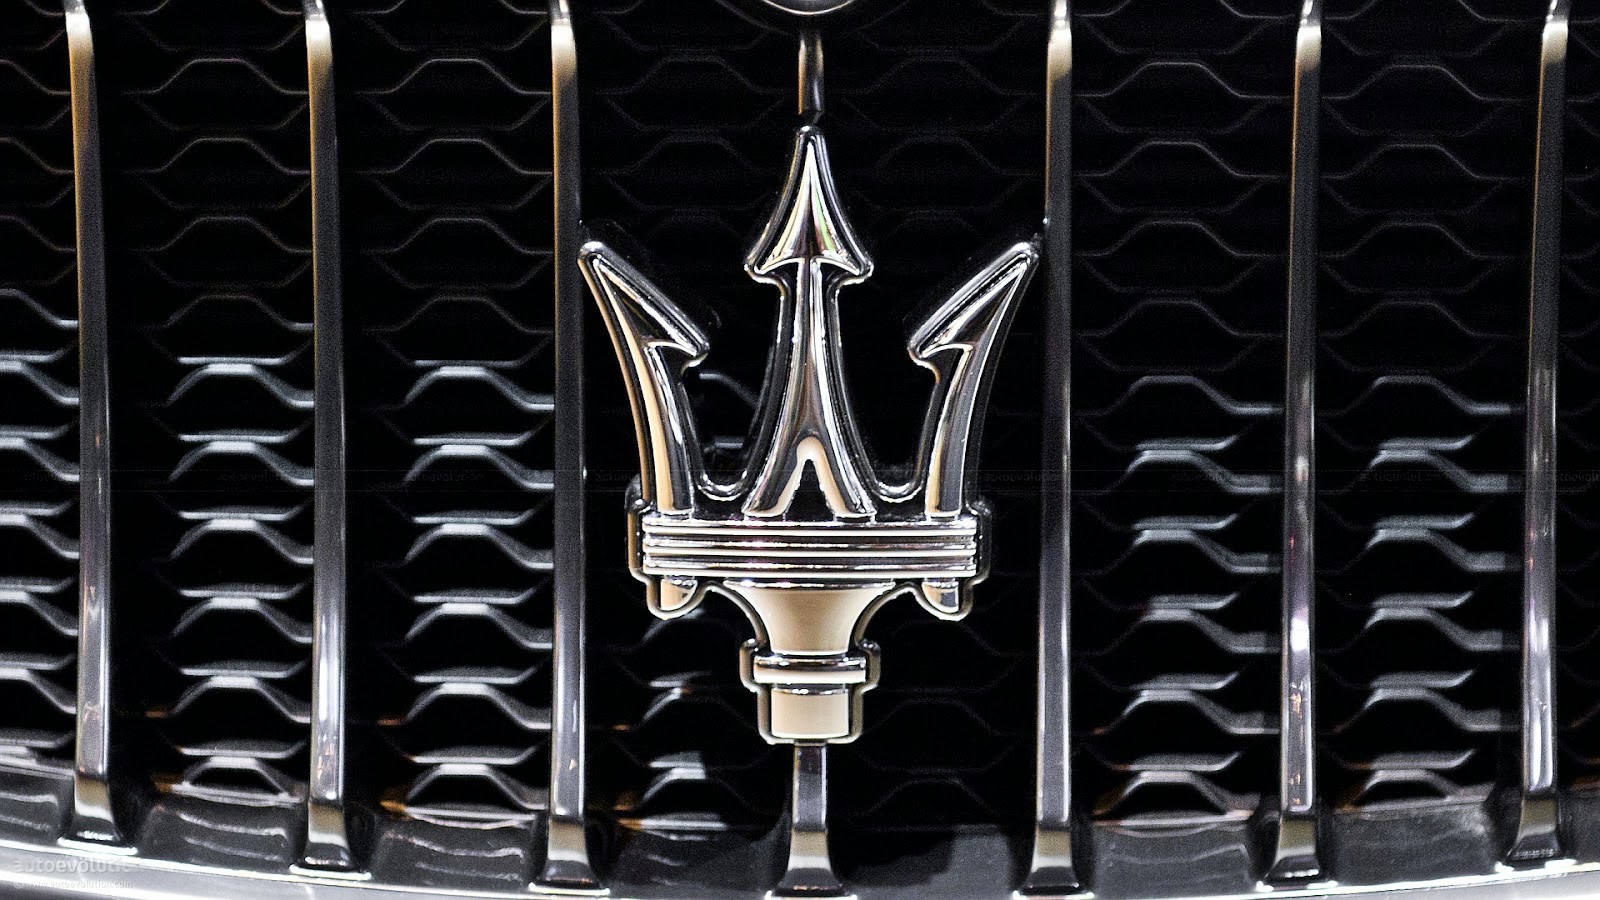  Maserati Logo 